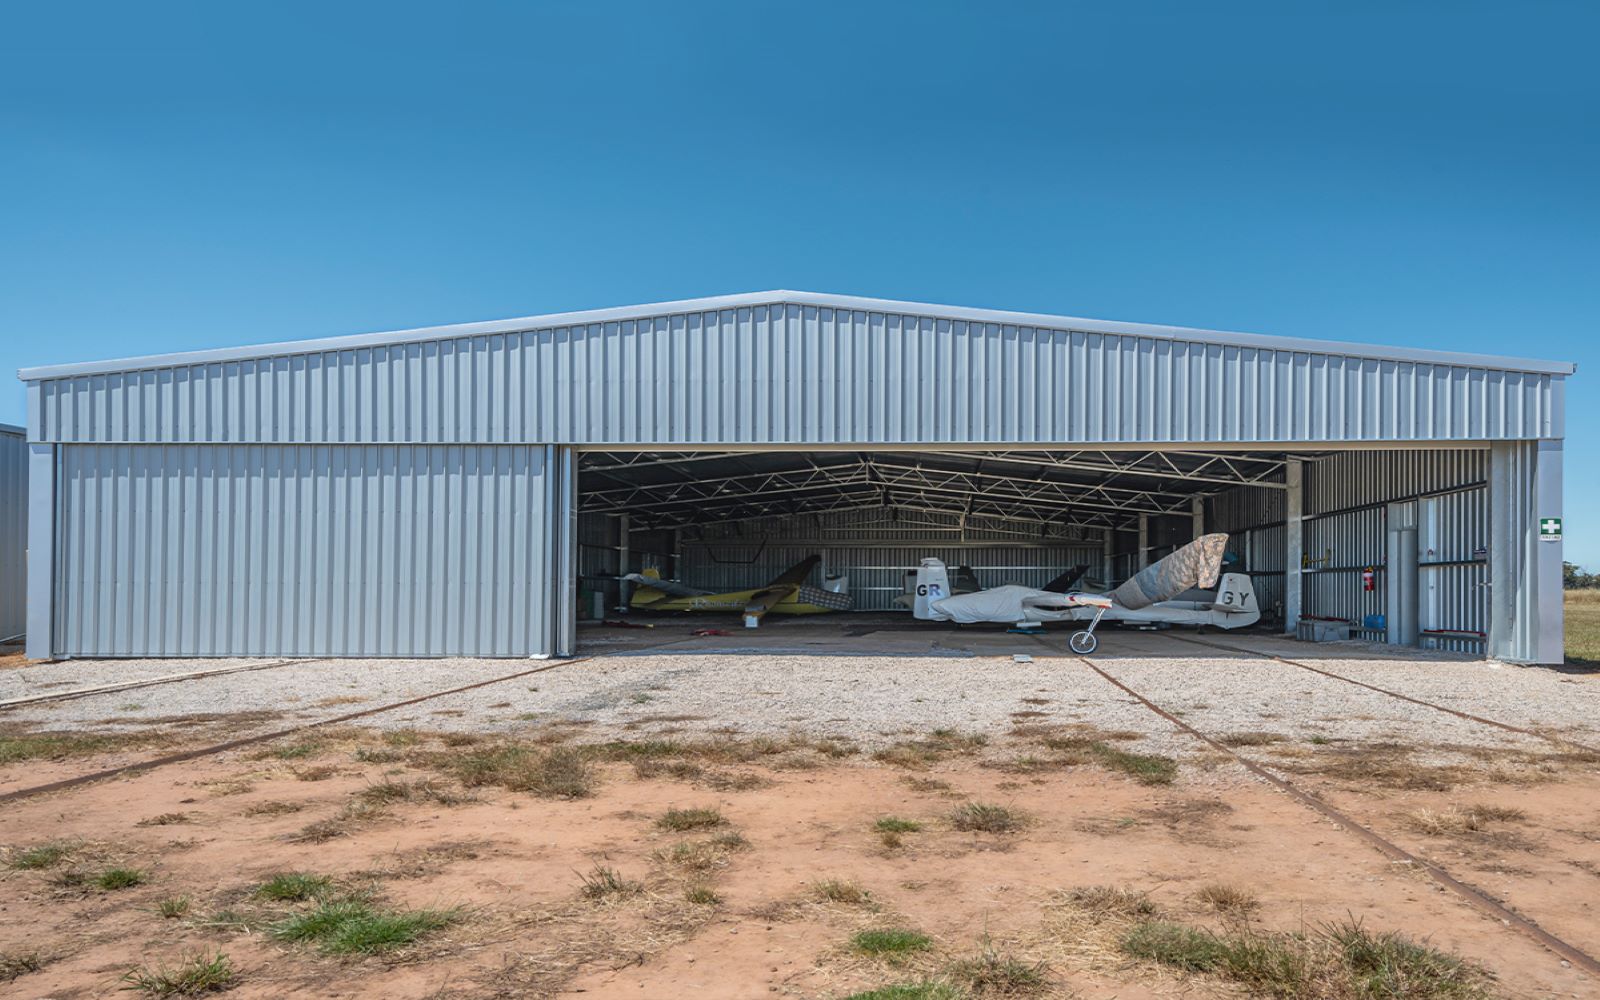 Bendigo Gliding Club aircraft hangar